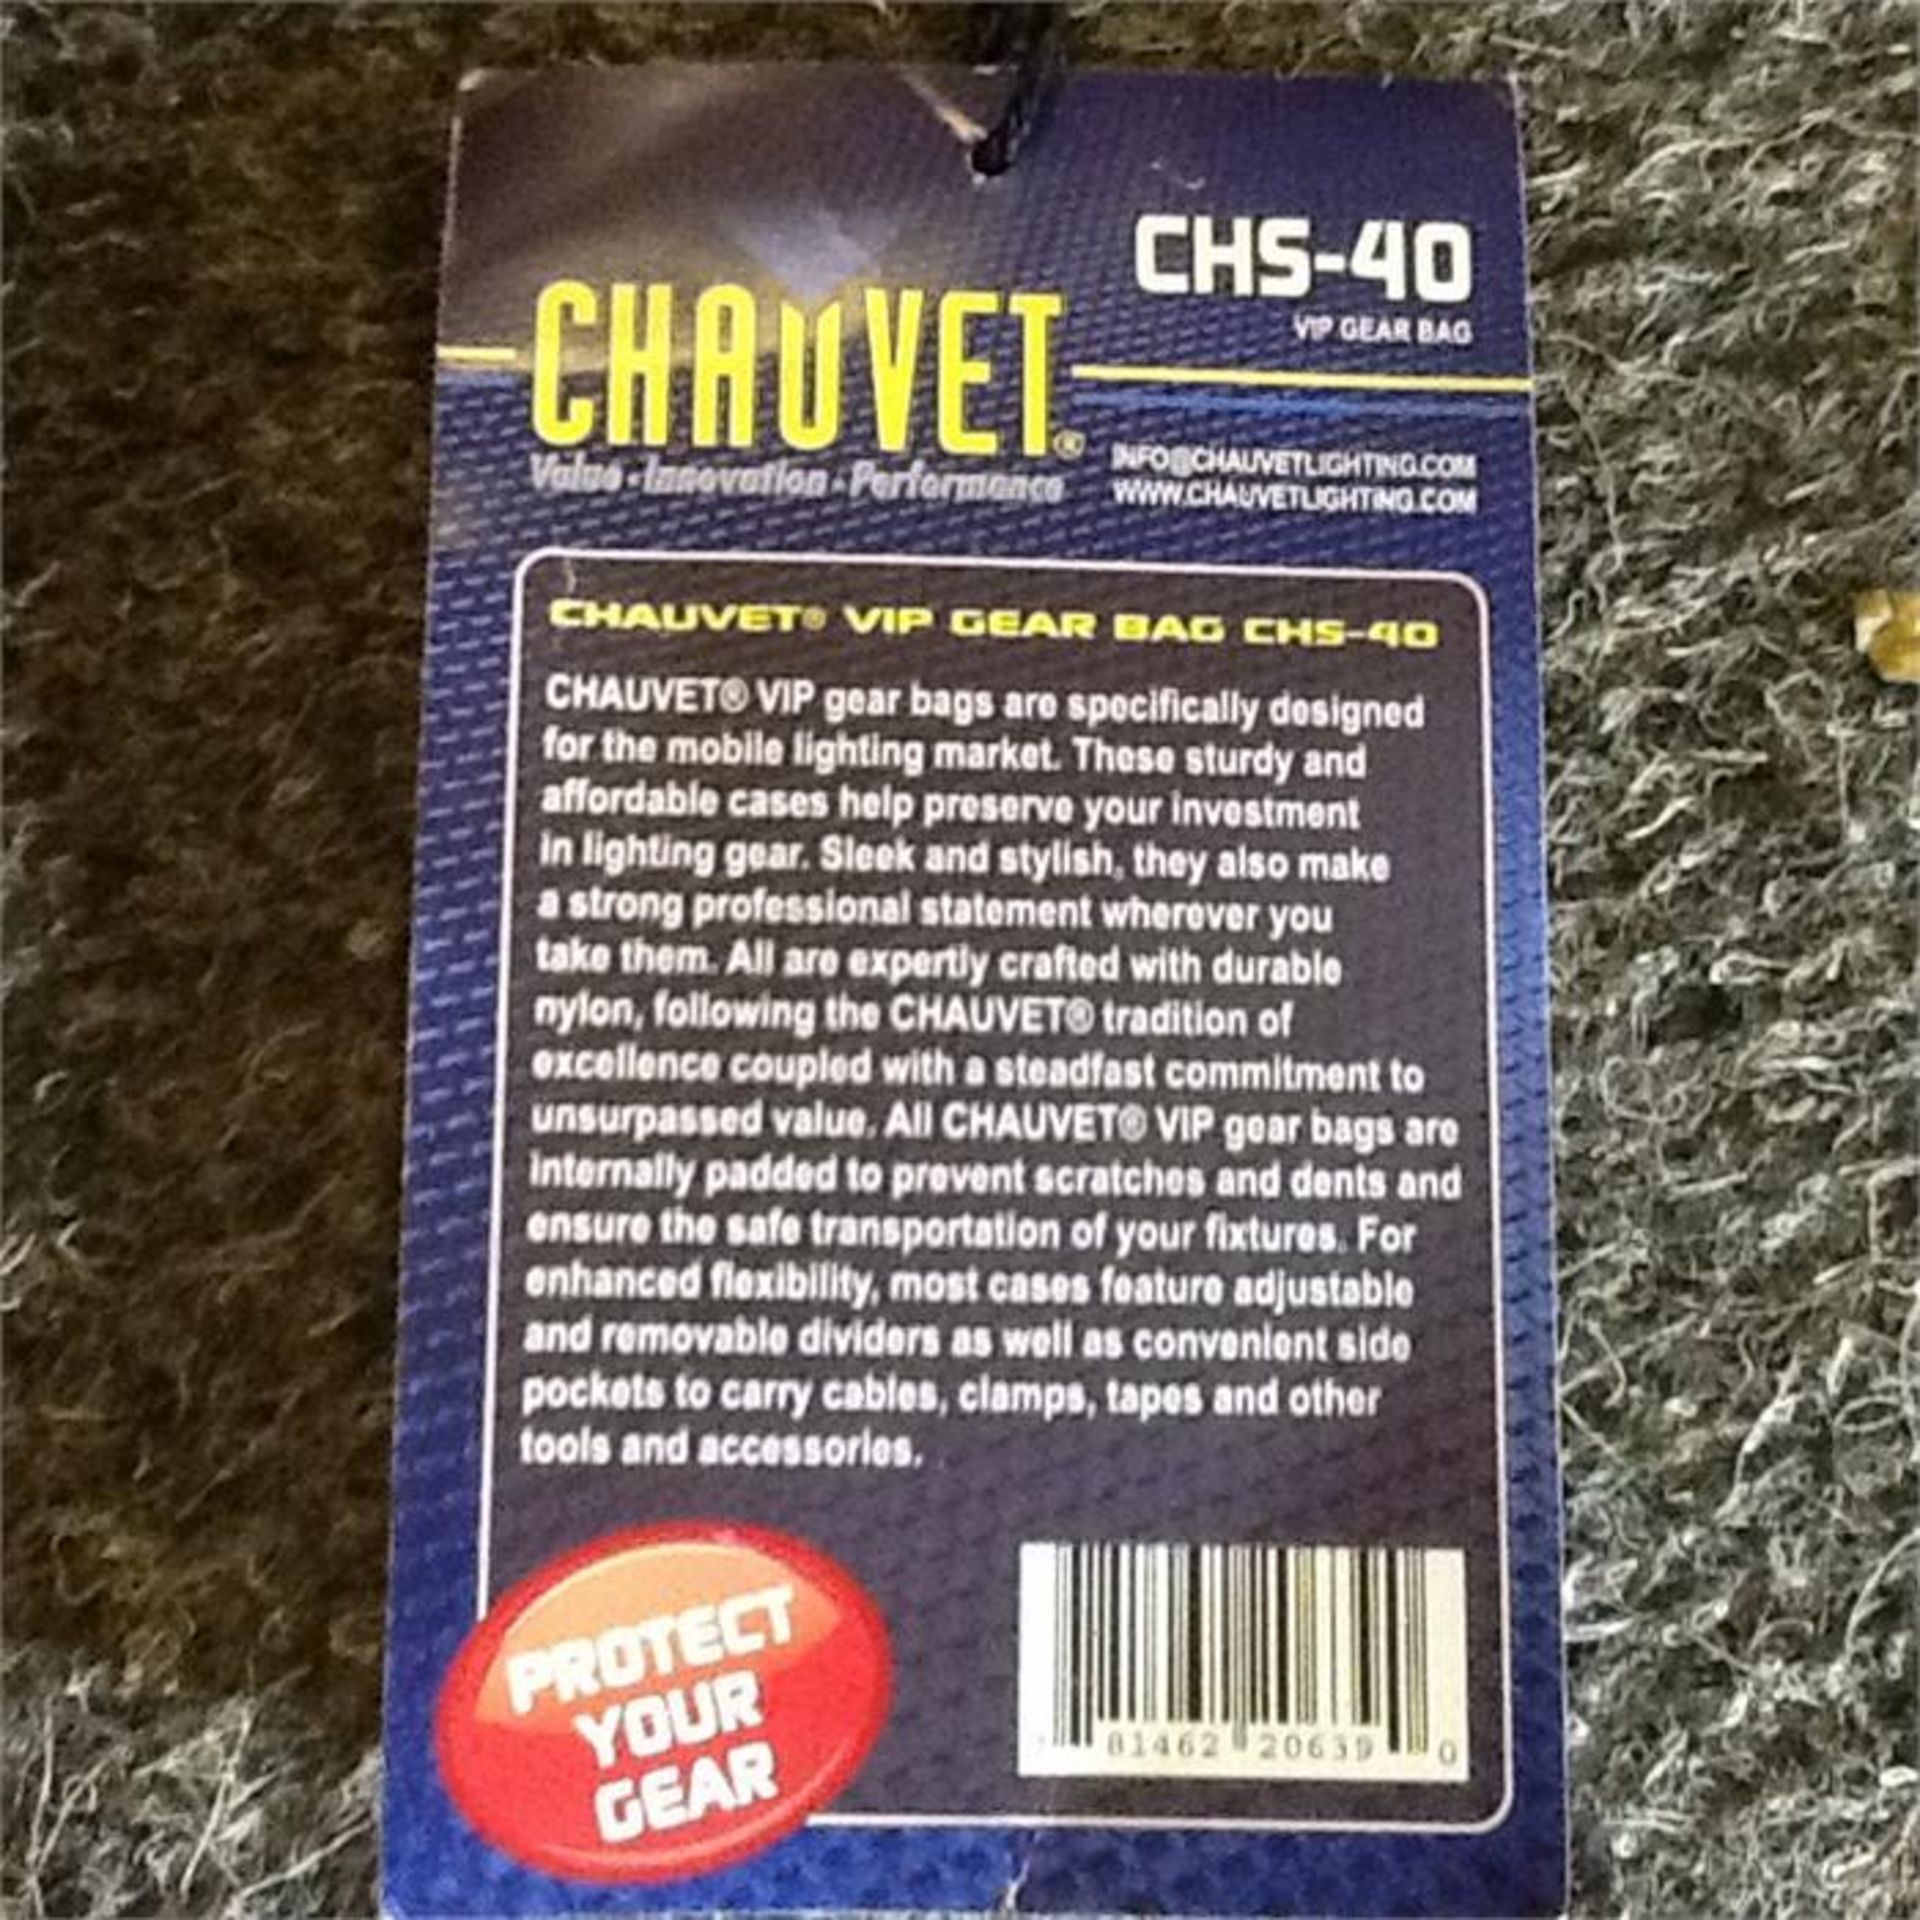 Chauvet  CHS-40 vip gear bag - Image 4 of 10